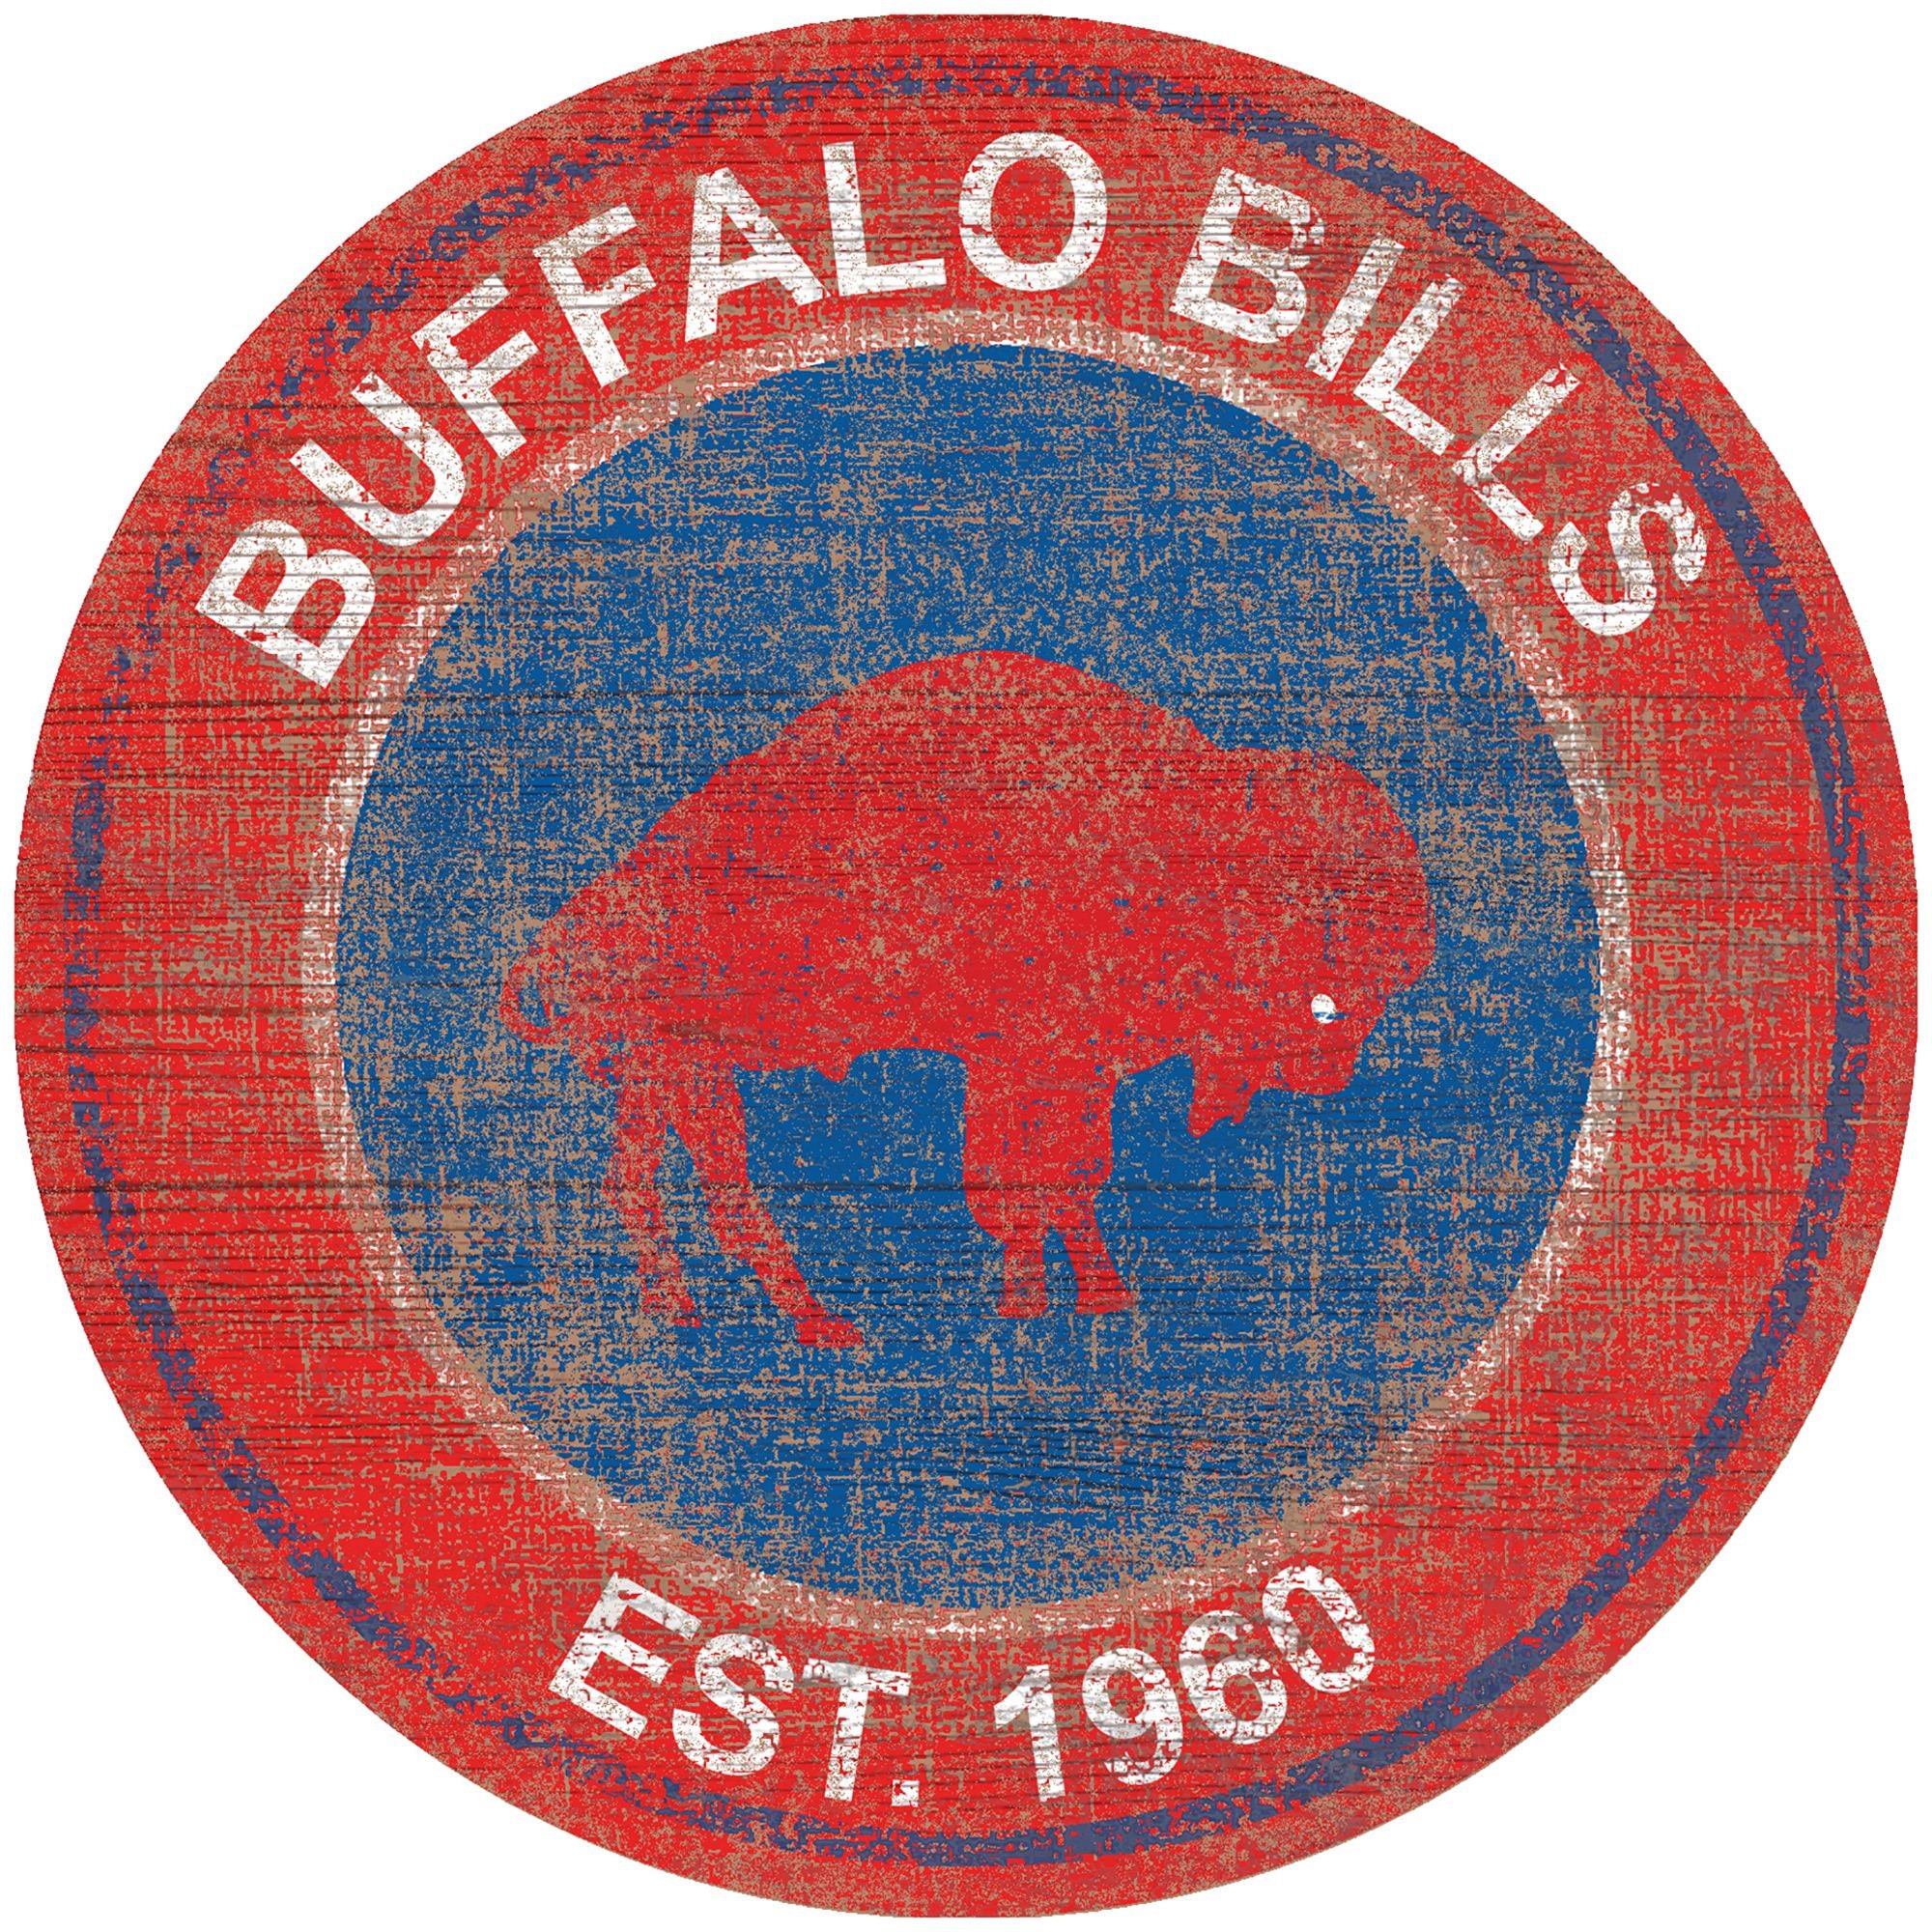 NFL Buffalo Bills Round Distressed Historic Throwback Established Wood Sign  24' In Diameter